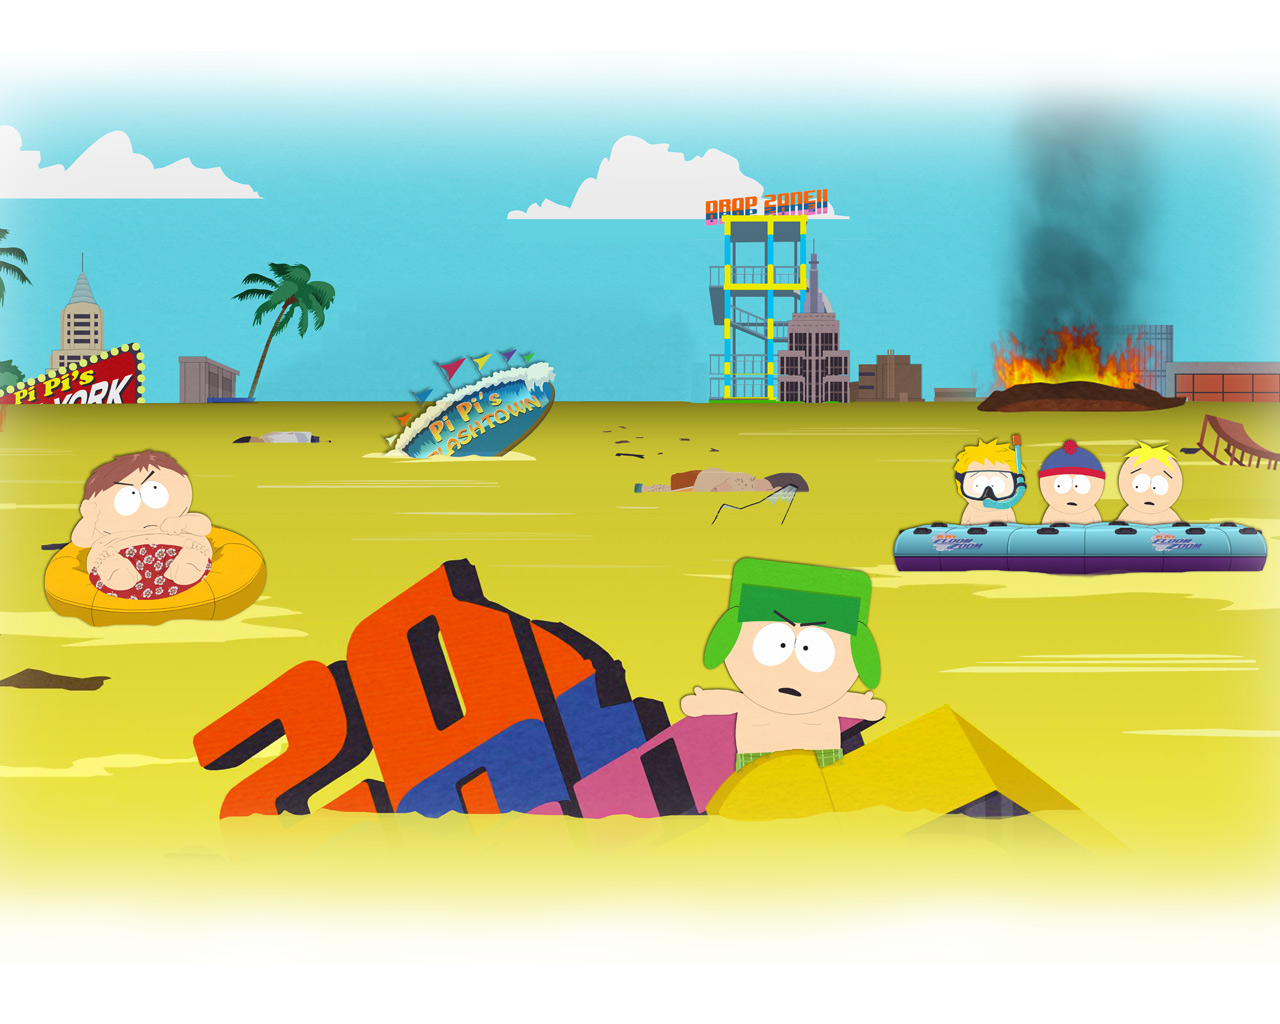 "South Park" desktop wallpaper number 2 (1280 x 1024 pixels)